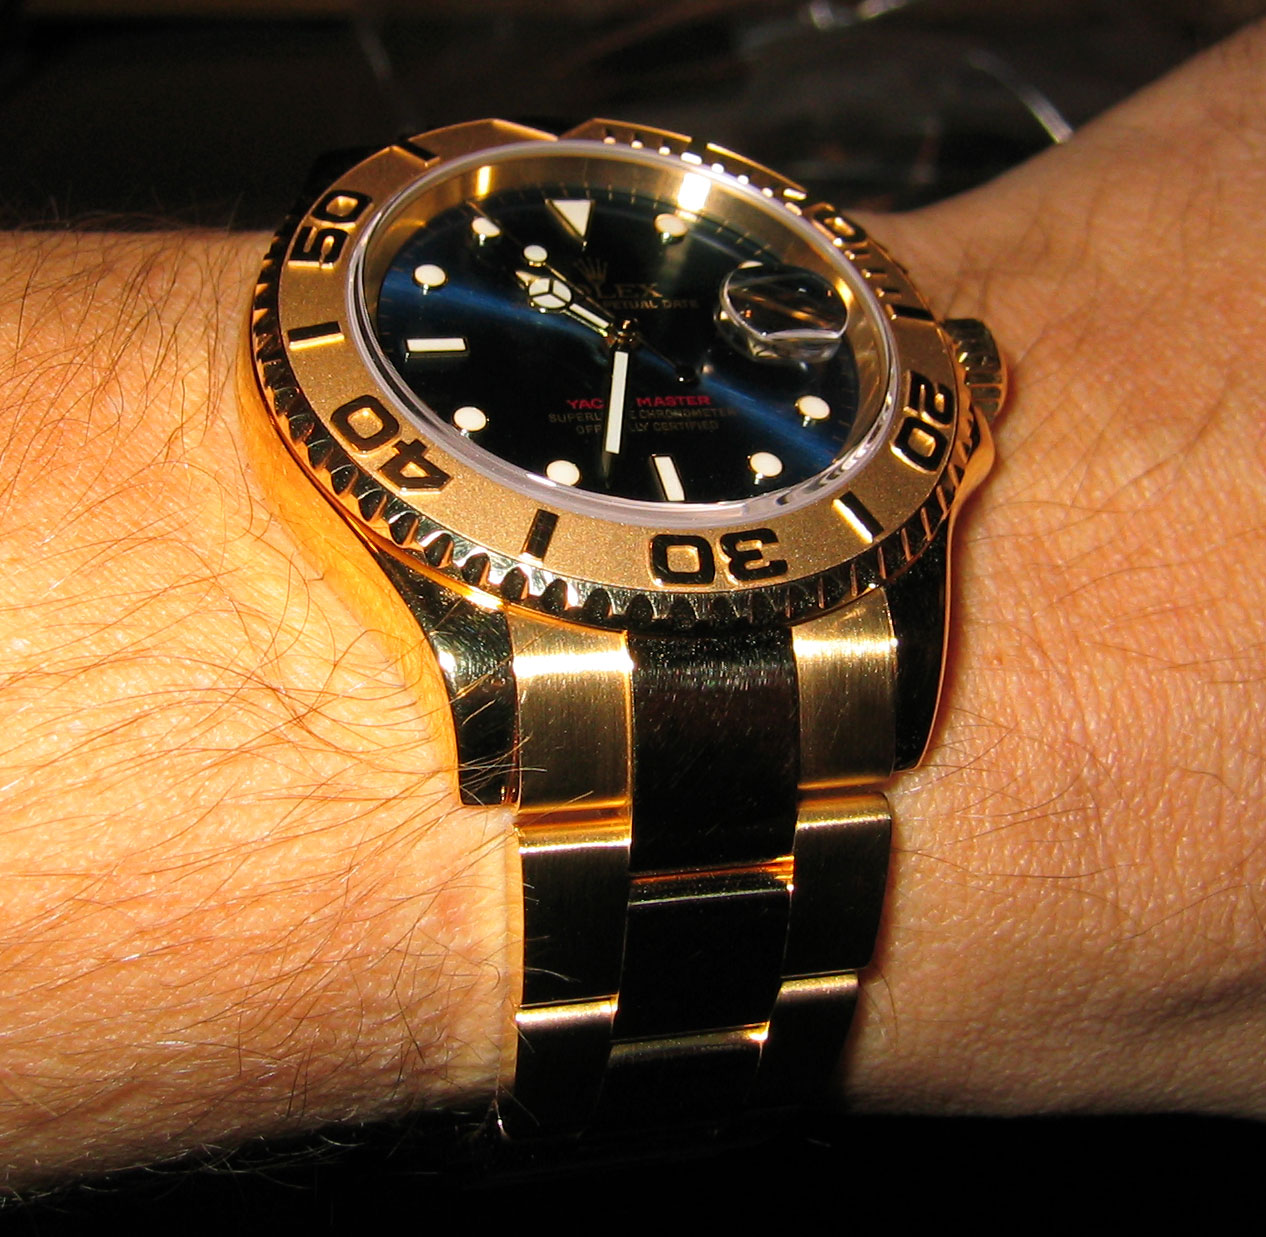 Rolex - A wrist shot of my favorite Rolex Yacht Master.